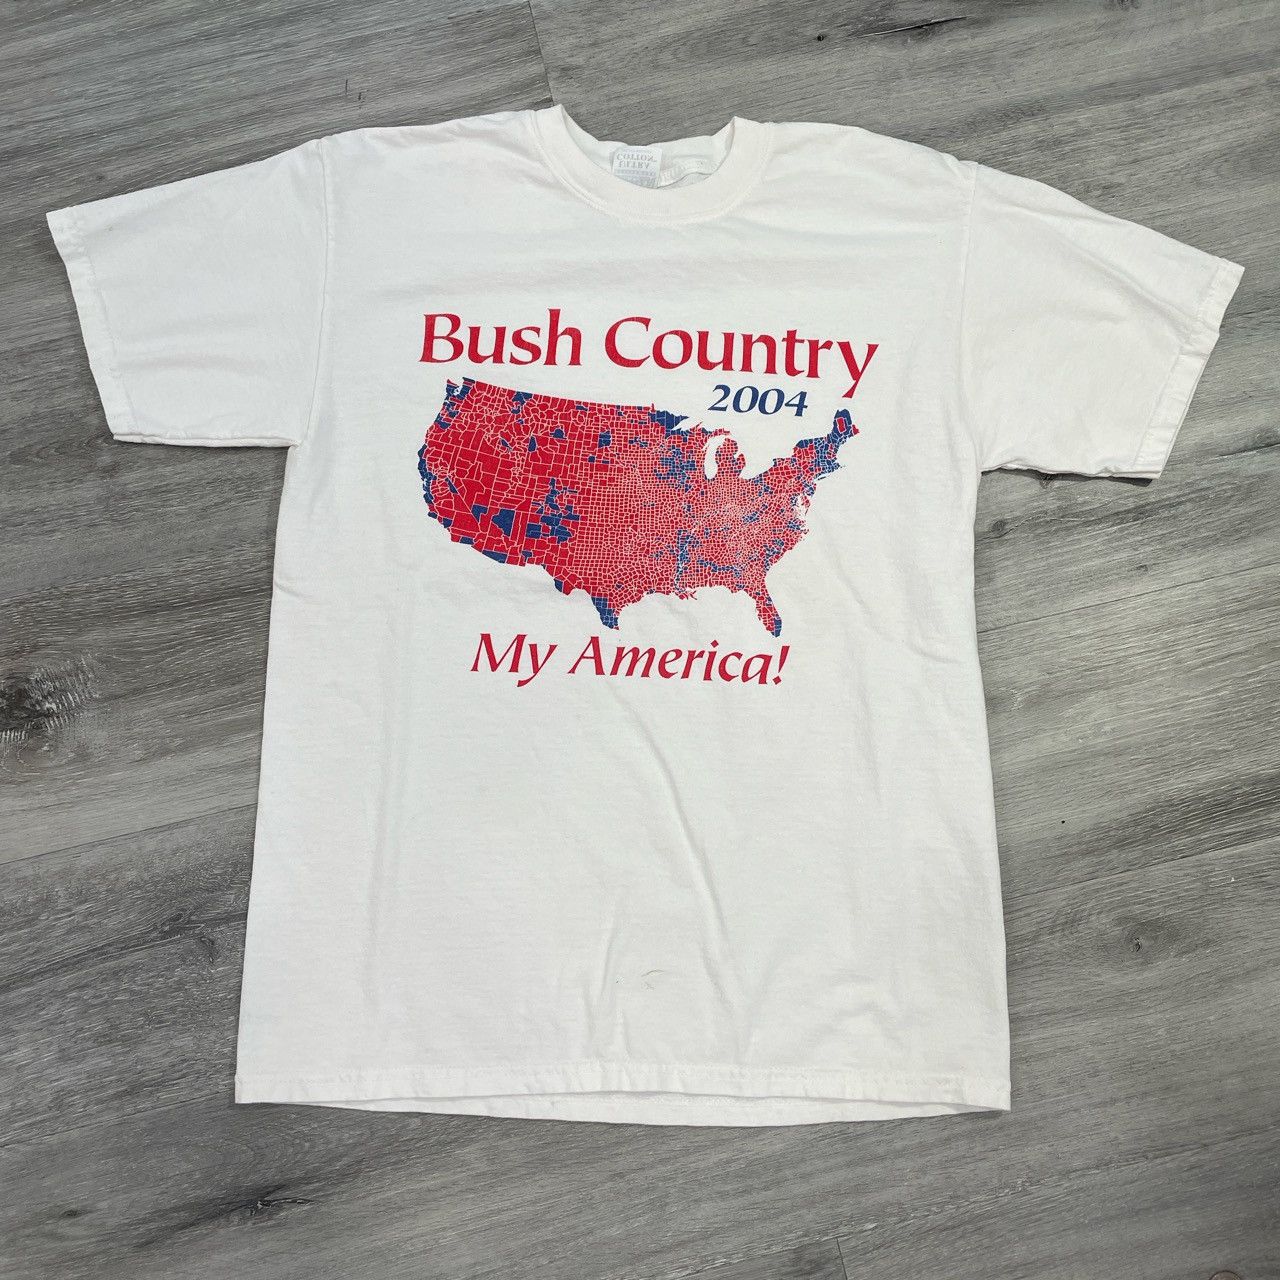 America 2004 Bush Country My America Politics Shirt Size US M / EU 48-50 / 2 - 1 Preview